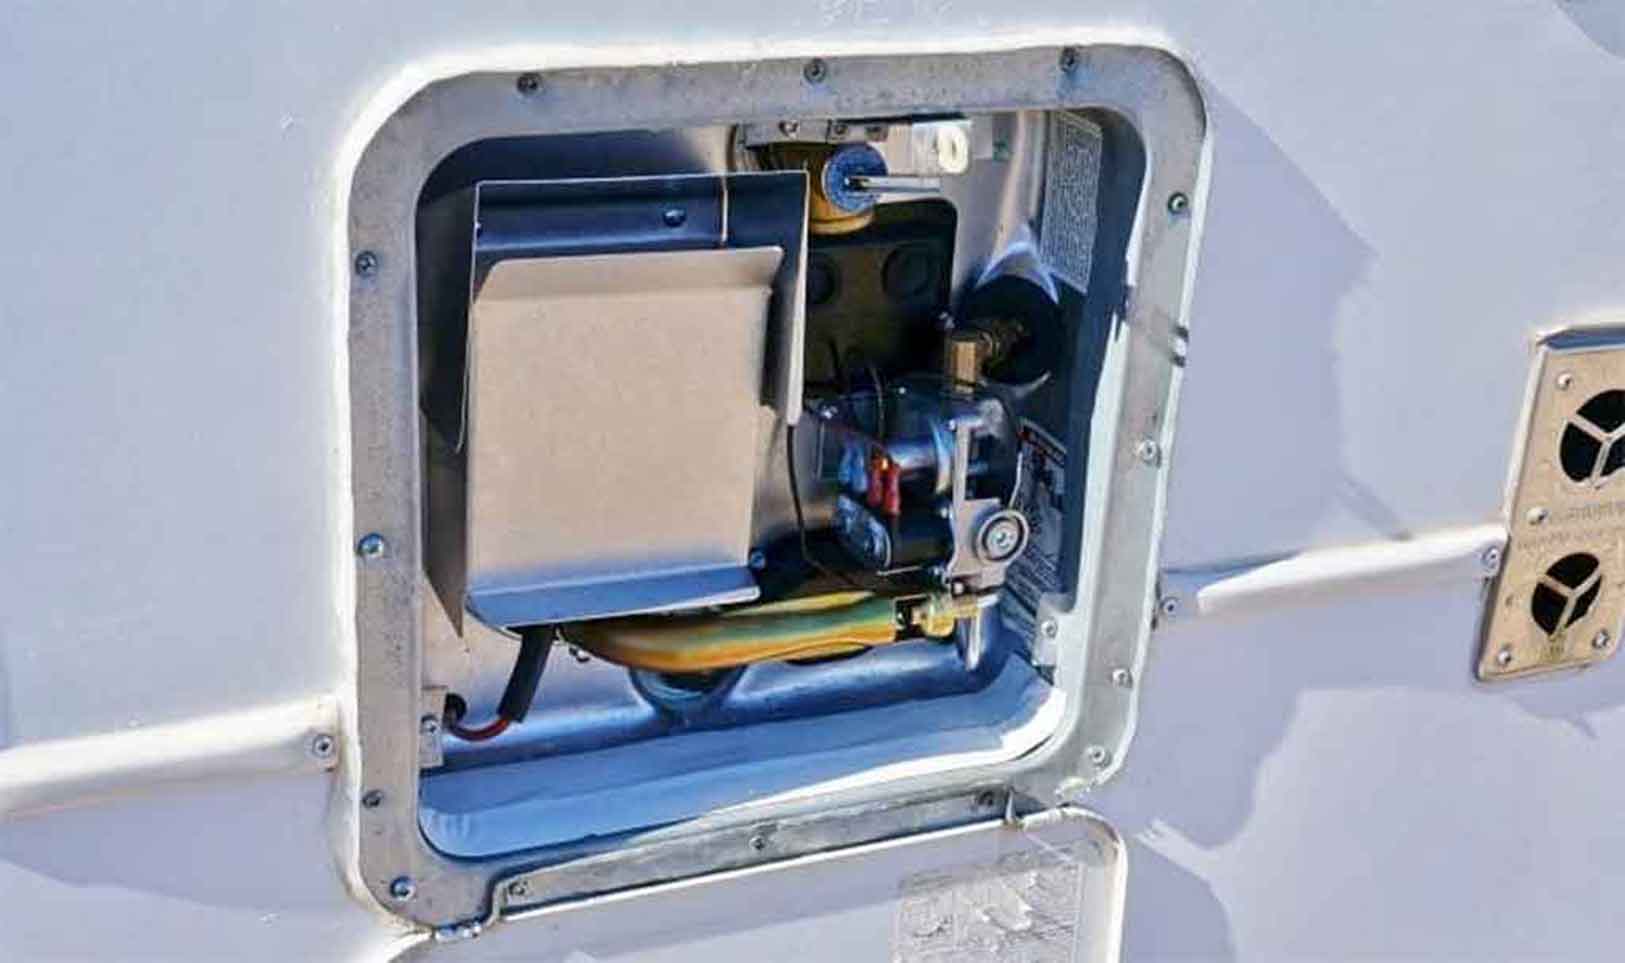 travel trailer hot water heater won't light